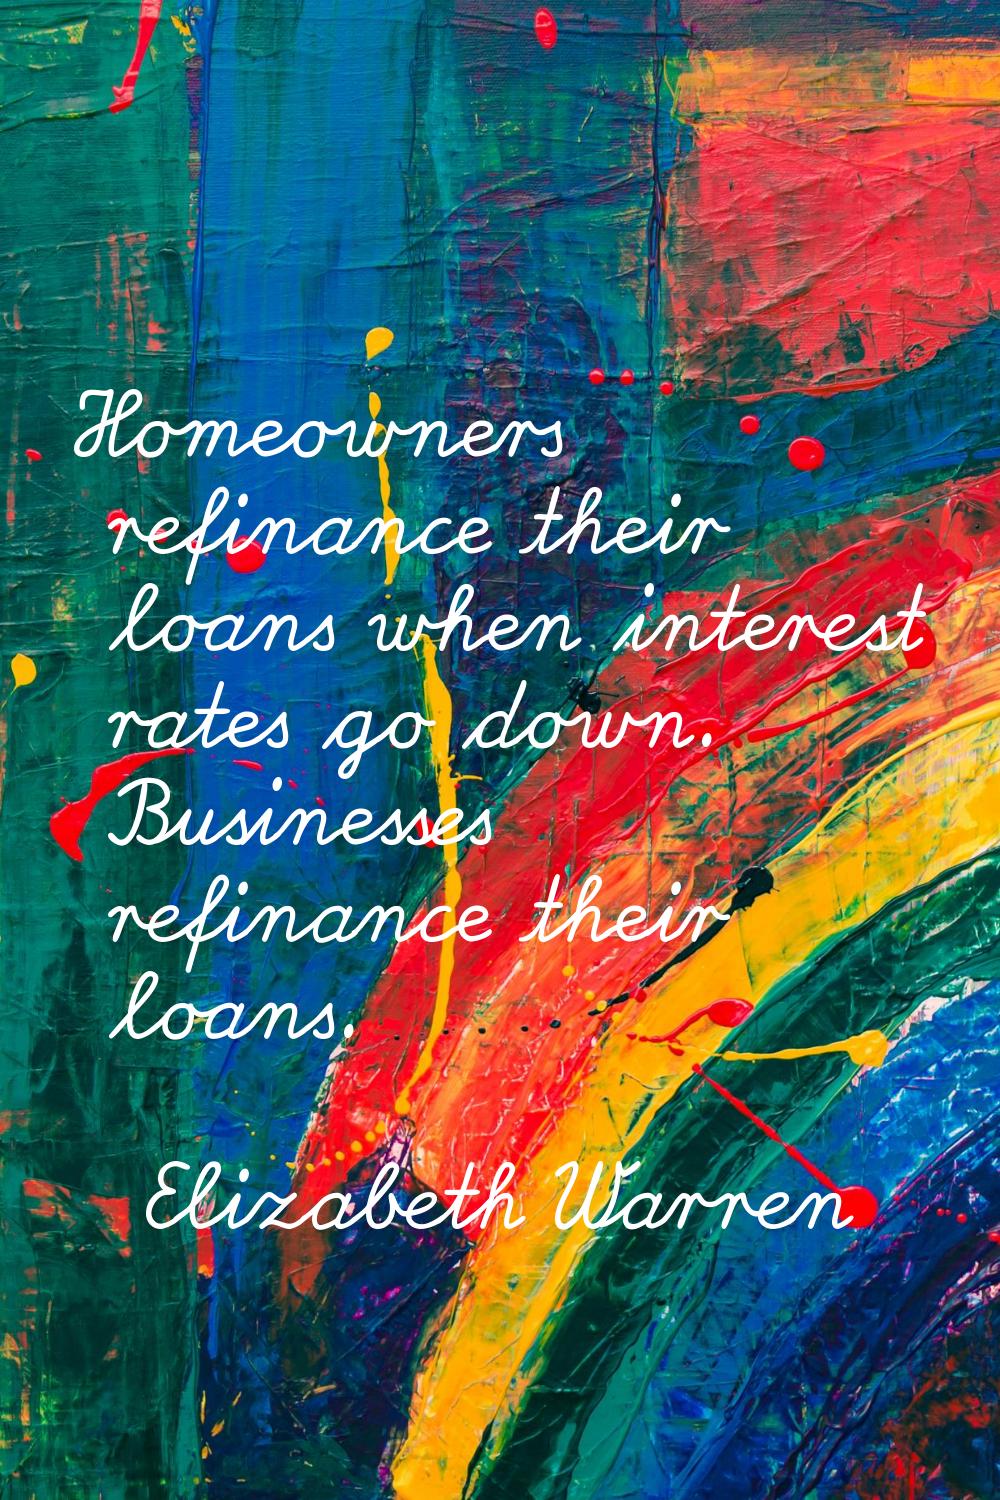 Homeowners refinance their loans when interest rates go down. Businesses refinance their loans.